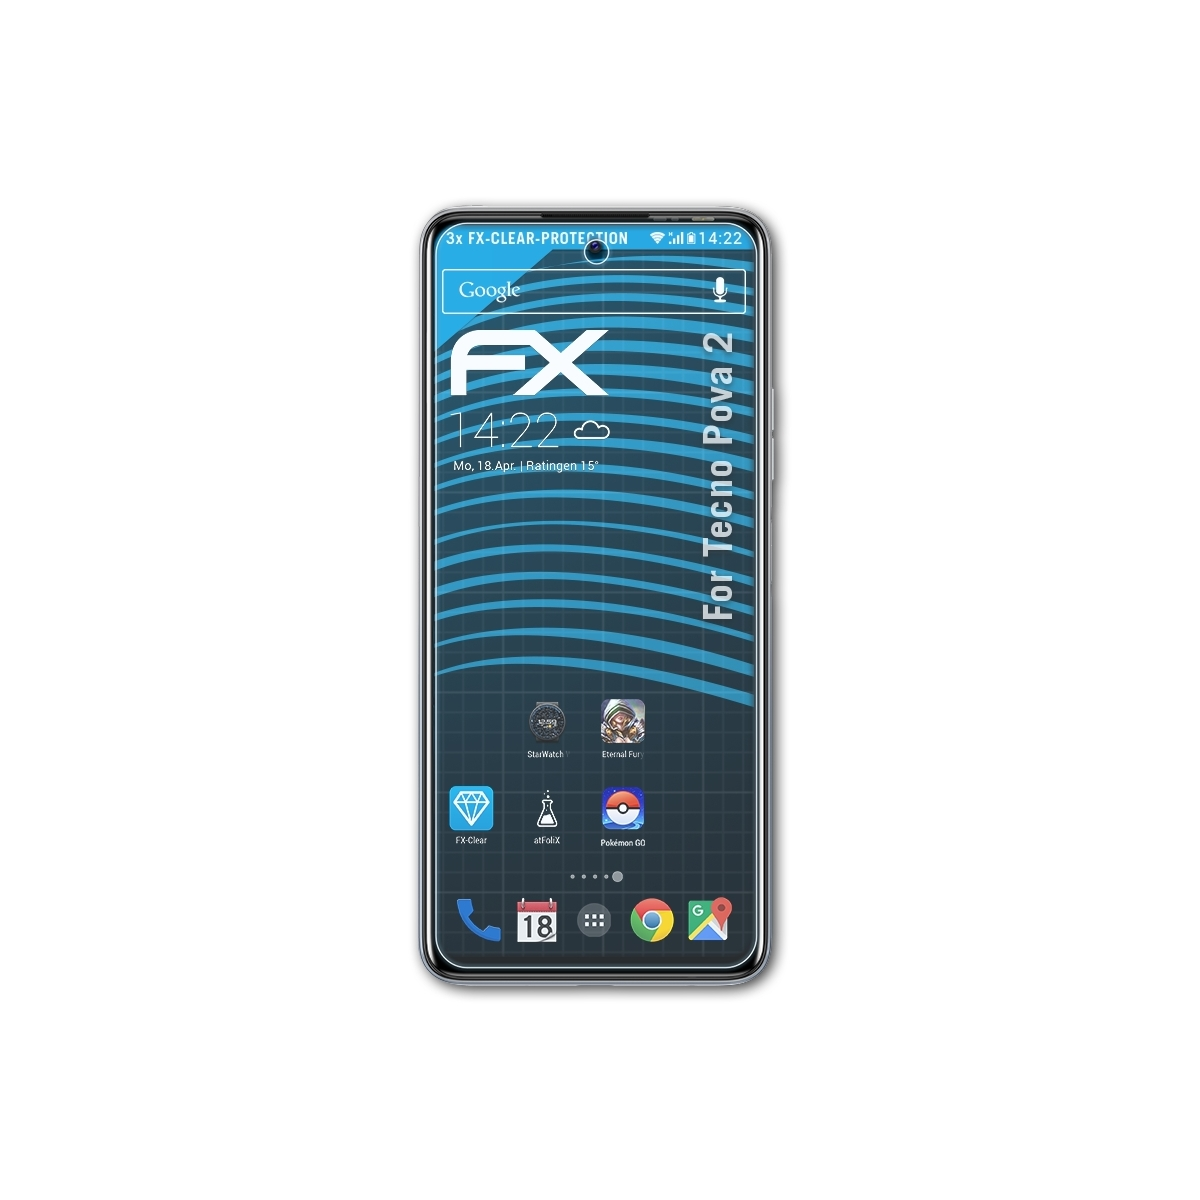 ATFOLIX 3x Pova FX-Clear Tecno Displayschutz(für 2)